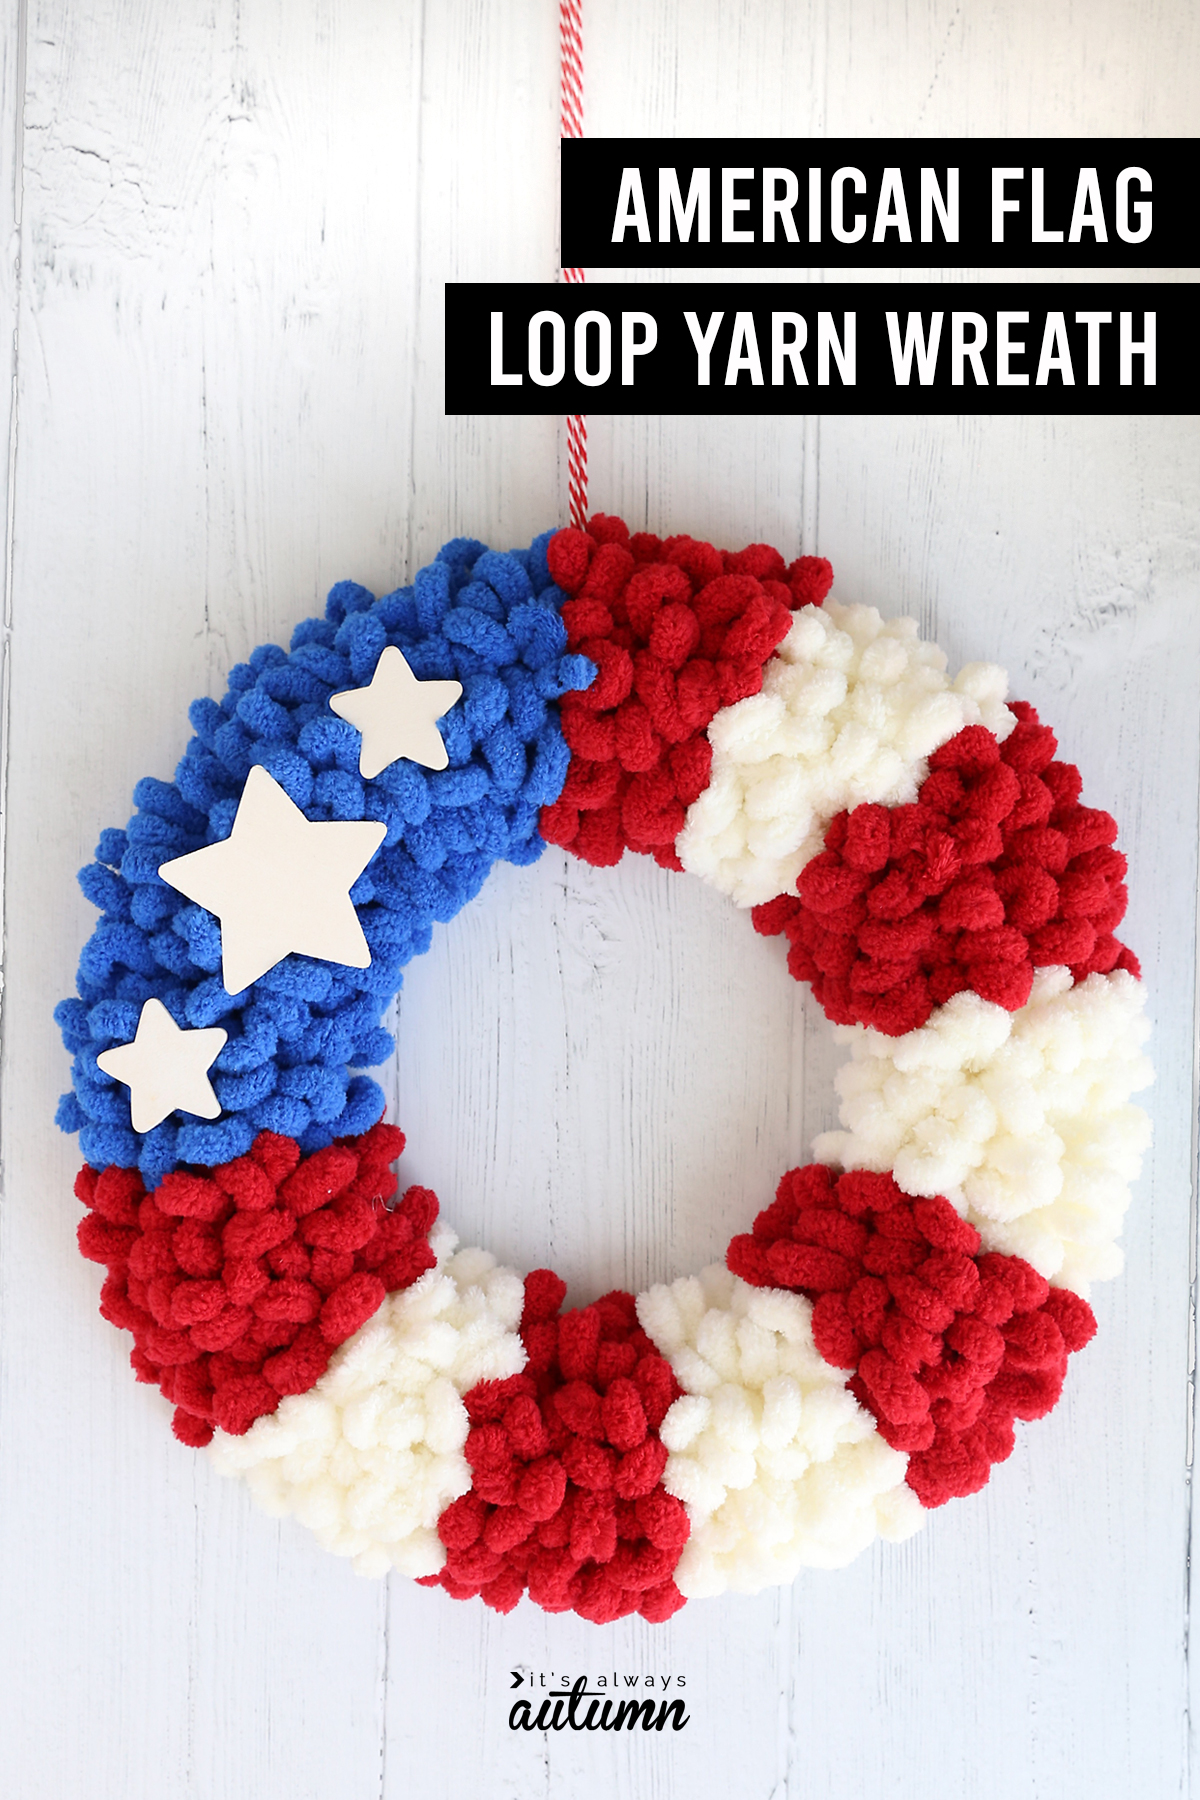 Soft Yarn Heart Wreath // Knit Wreath on Wire Frame With Ribbon